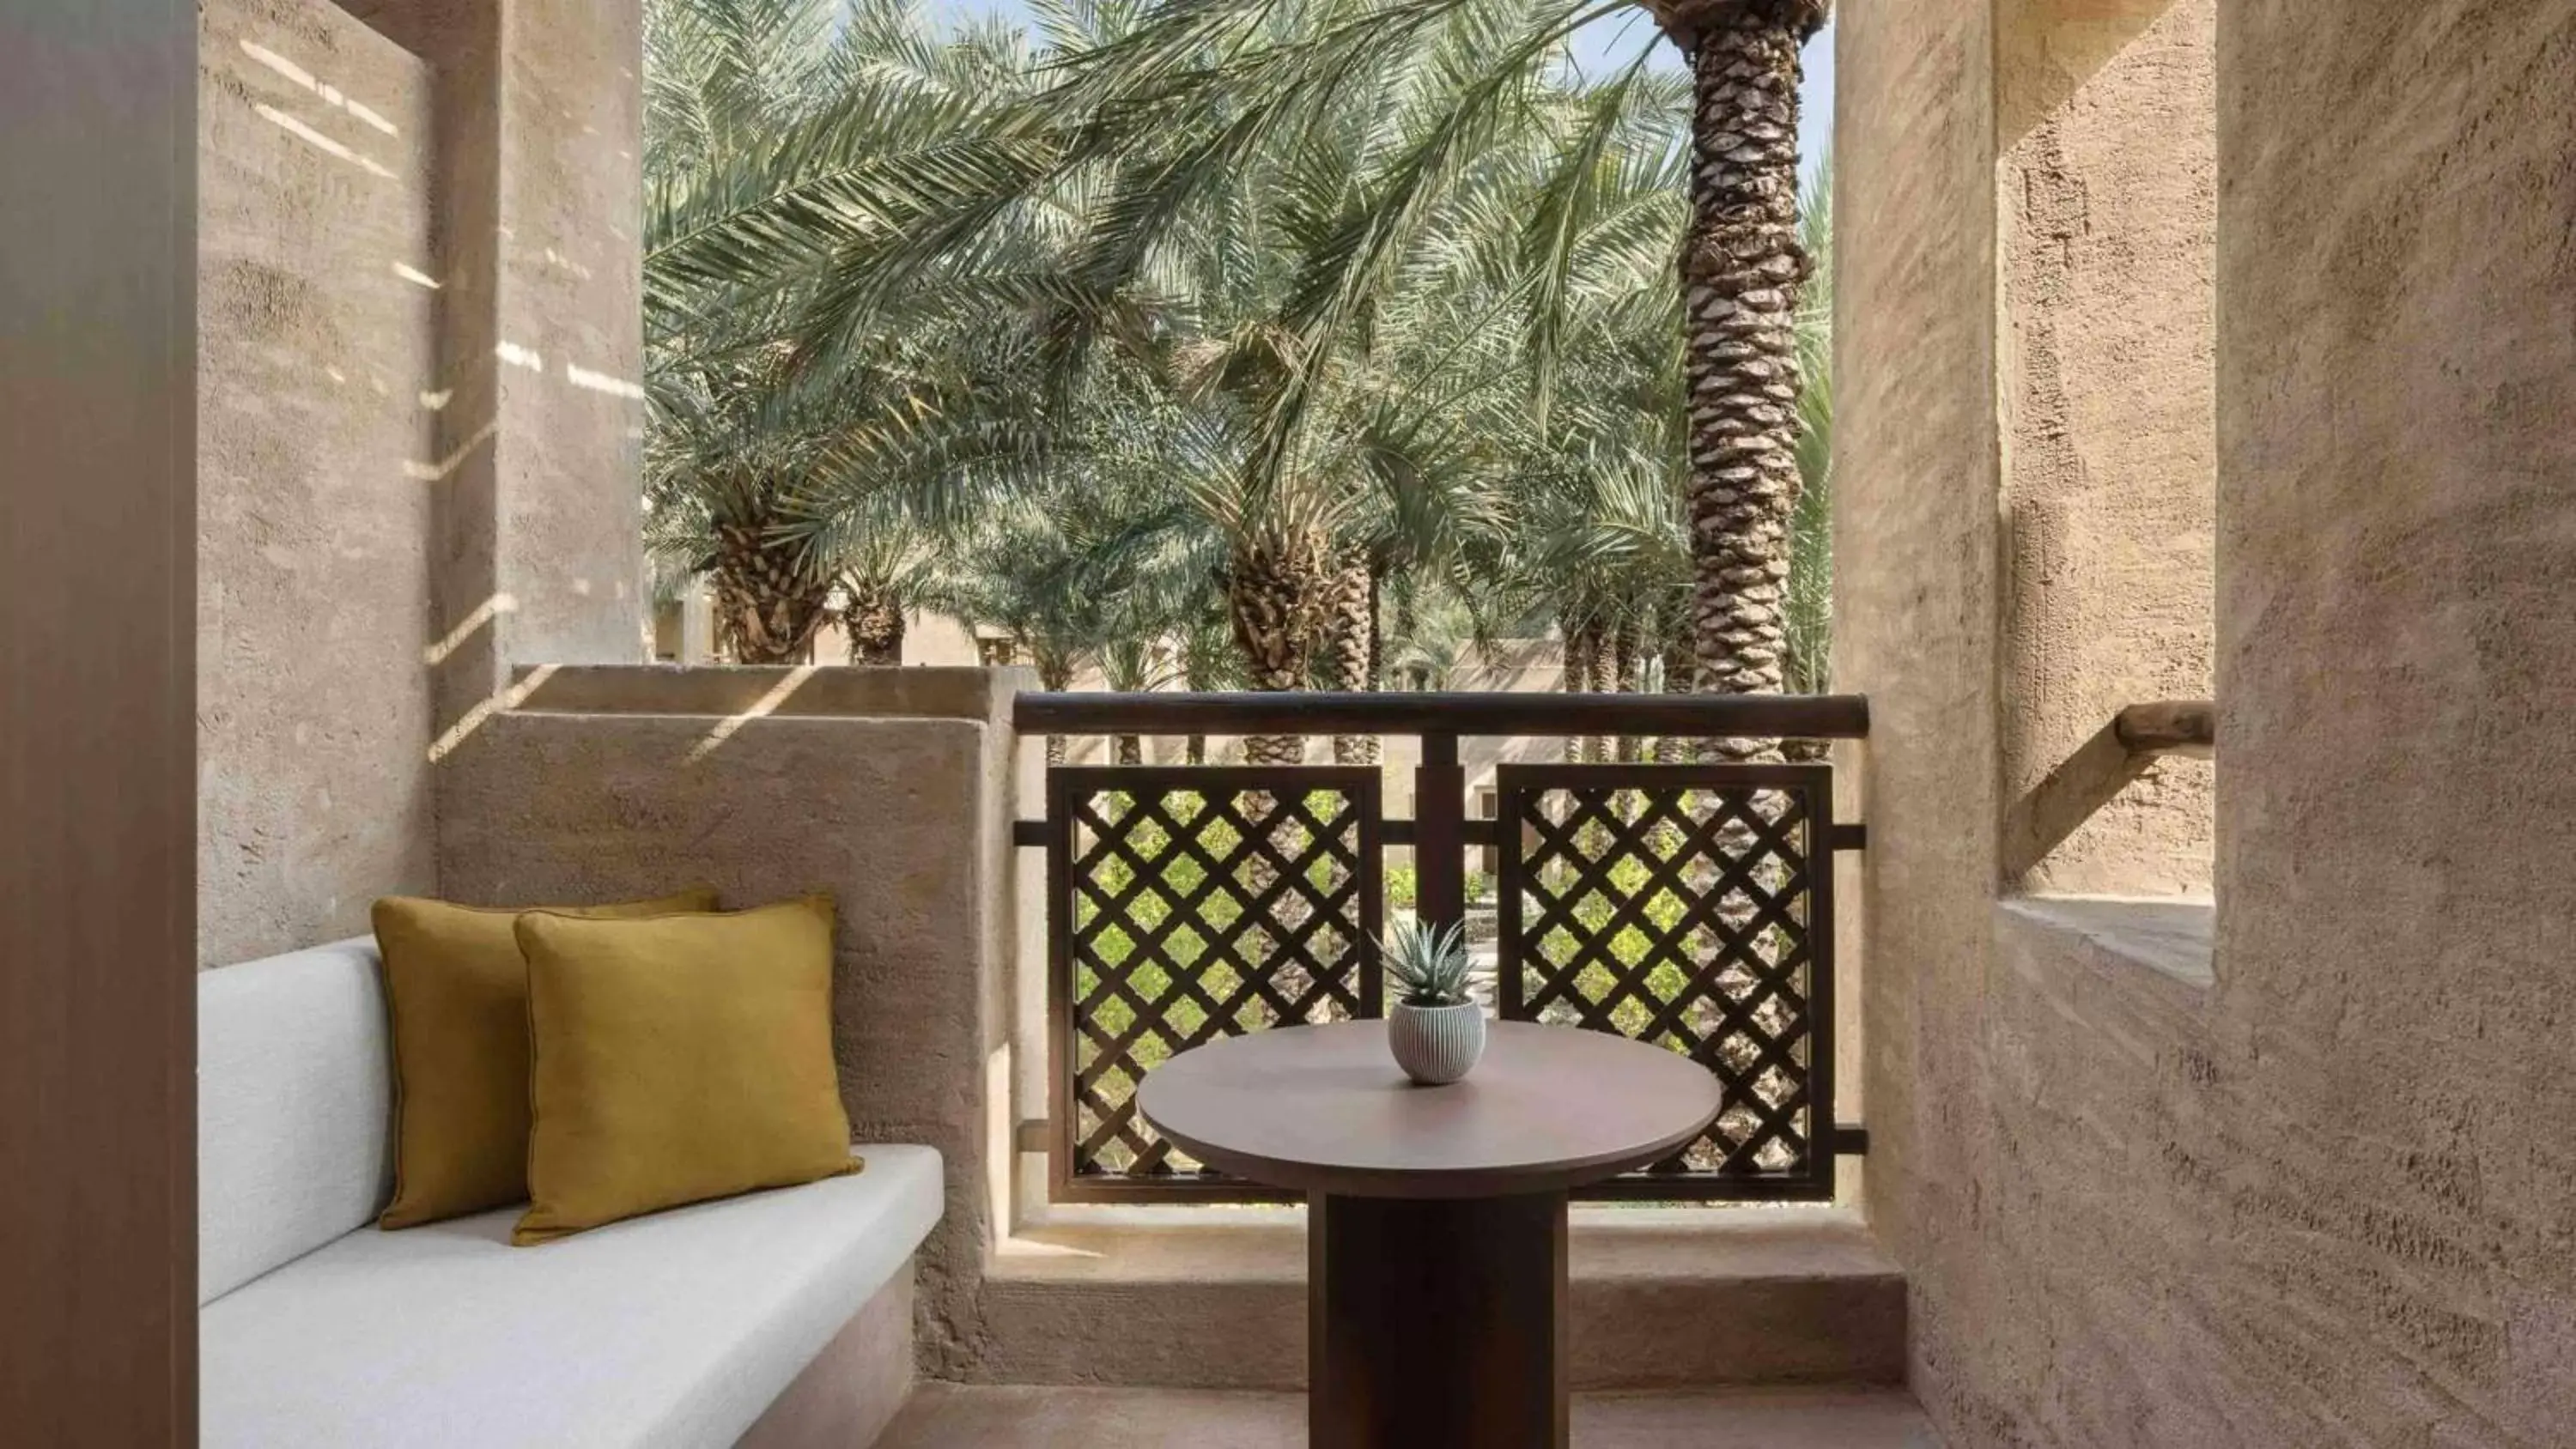 Bedroom, Seating Area in Bab Al Shams, A Rare Finds Desert Resort, Dubai